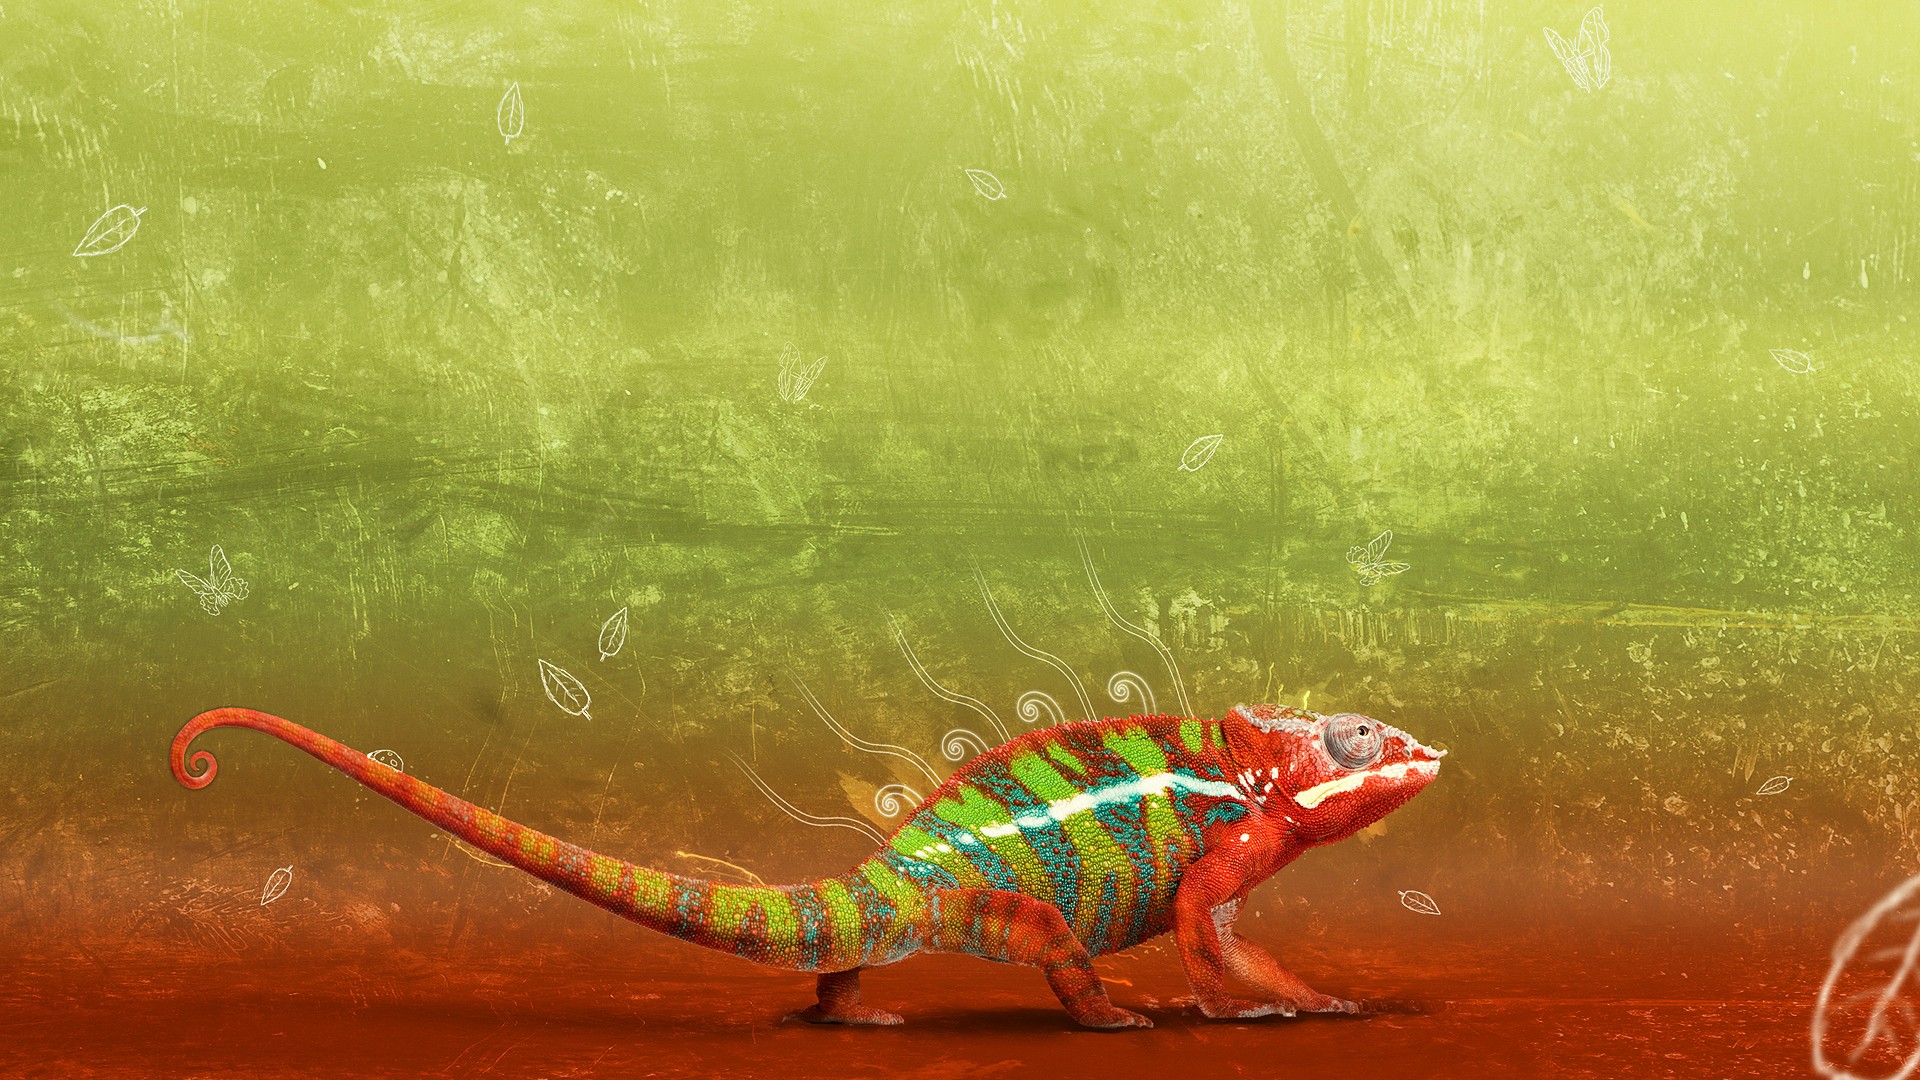 General 1920x1080 chameleons reptiles grunge leaves animals digital art